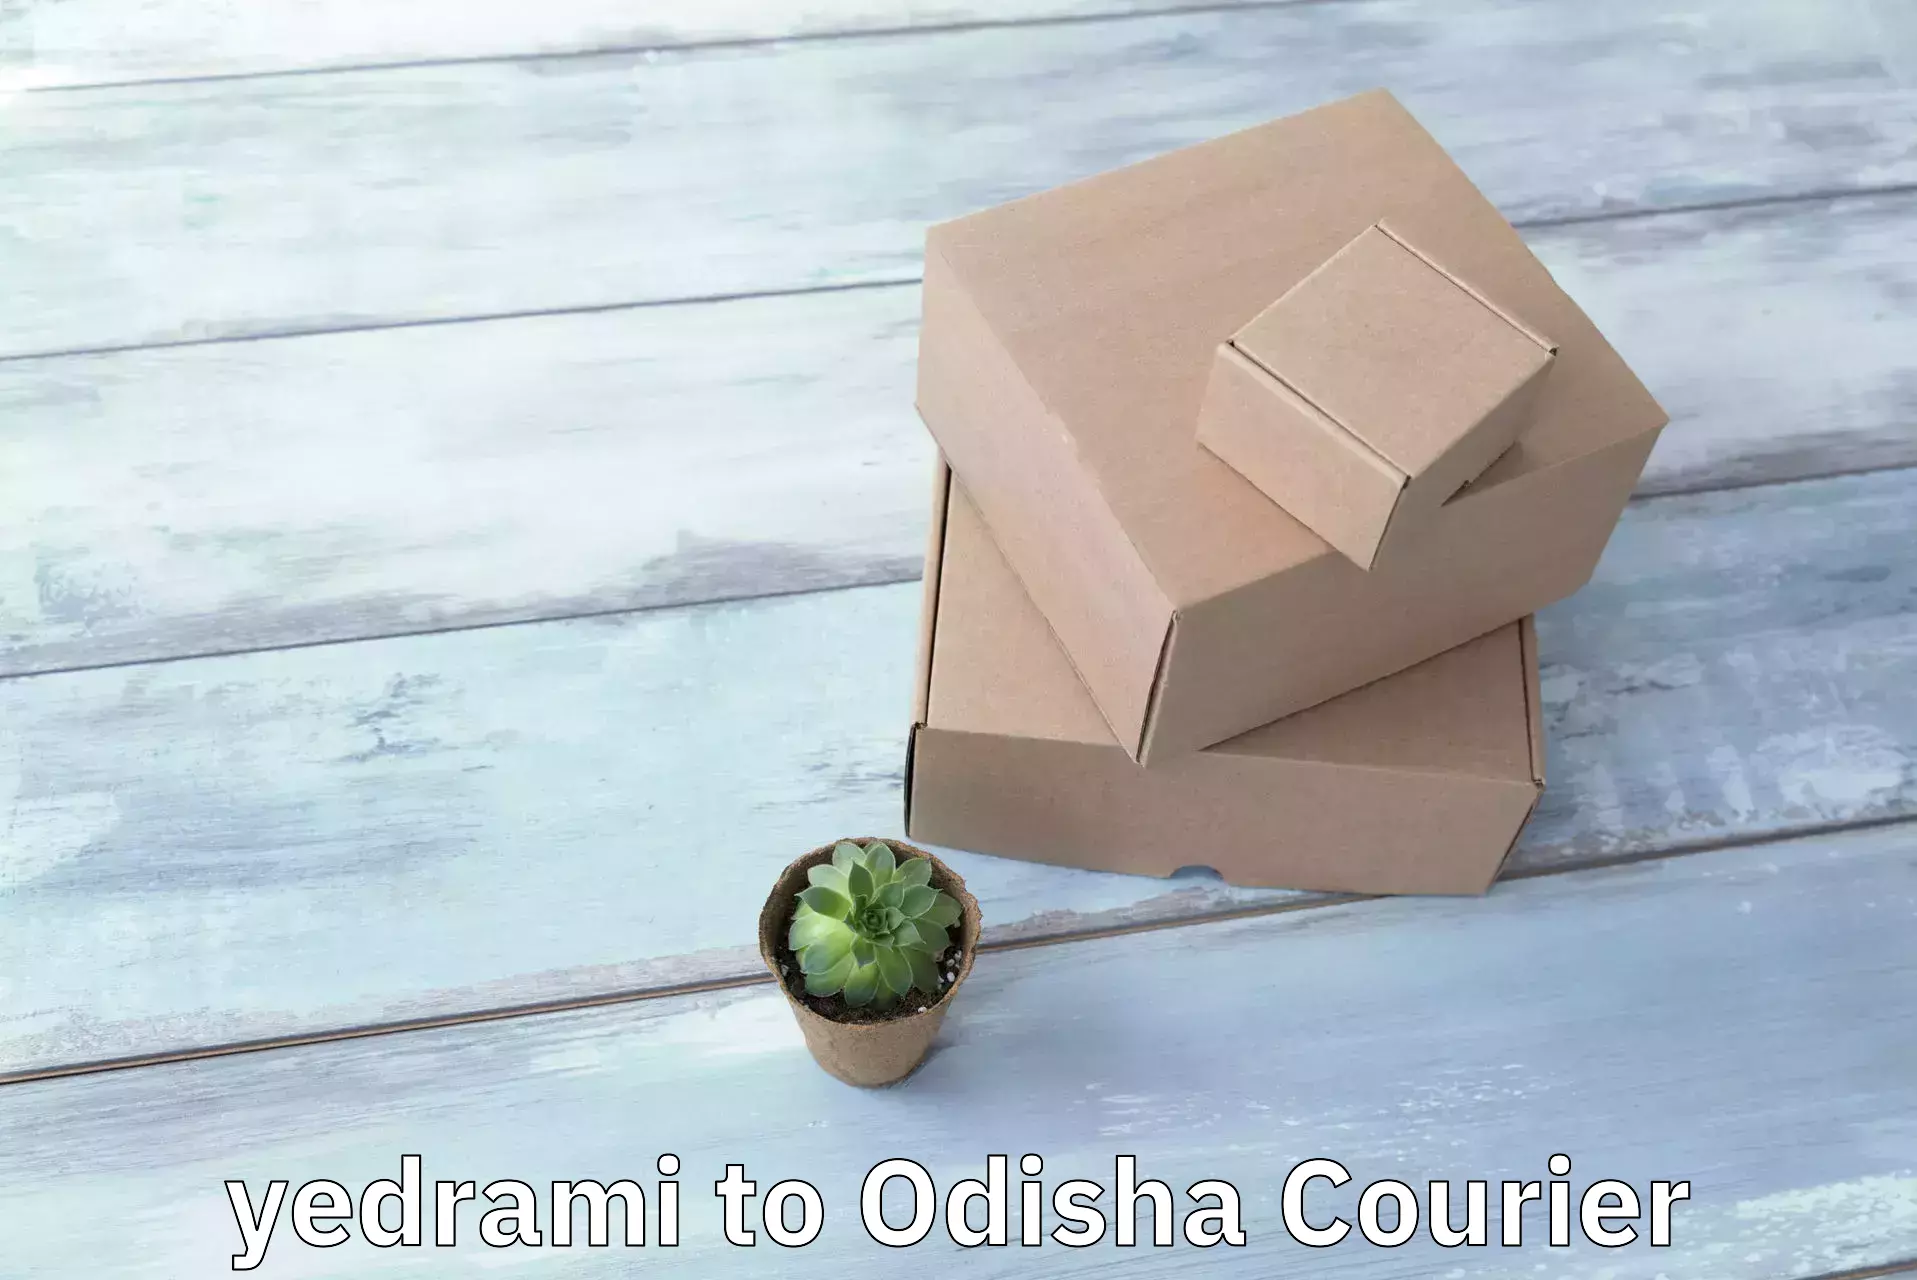 Versatile courier offerings yedrami to Odisha